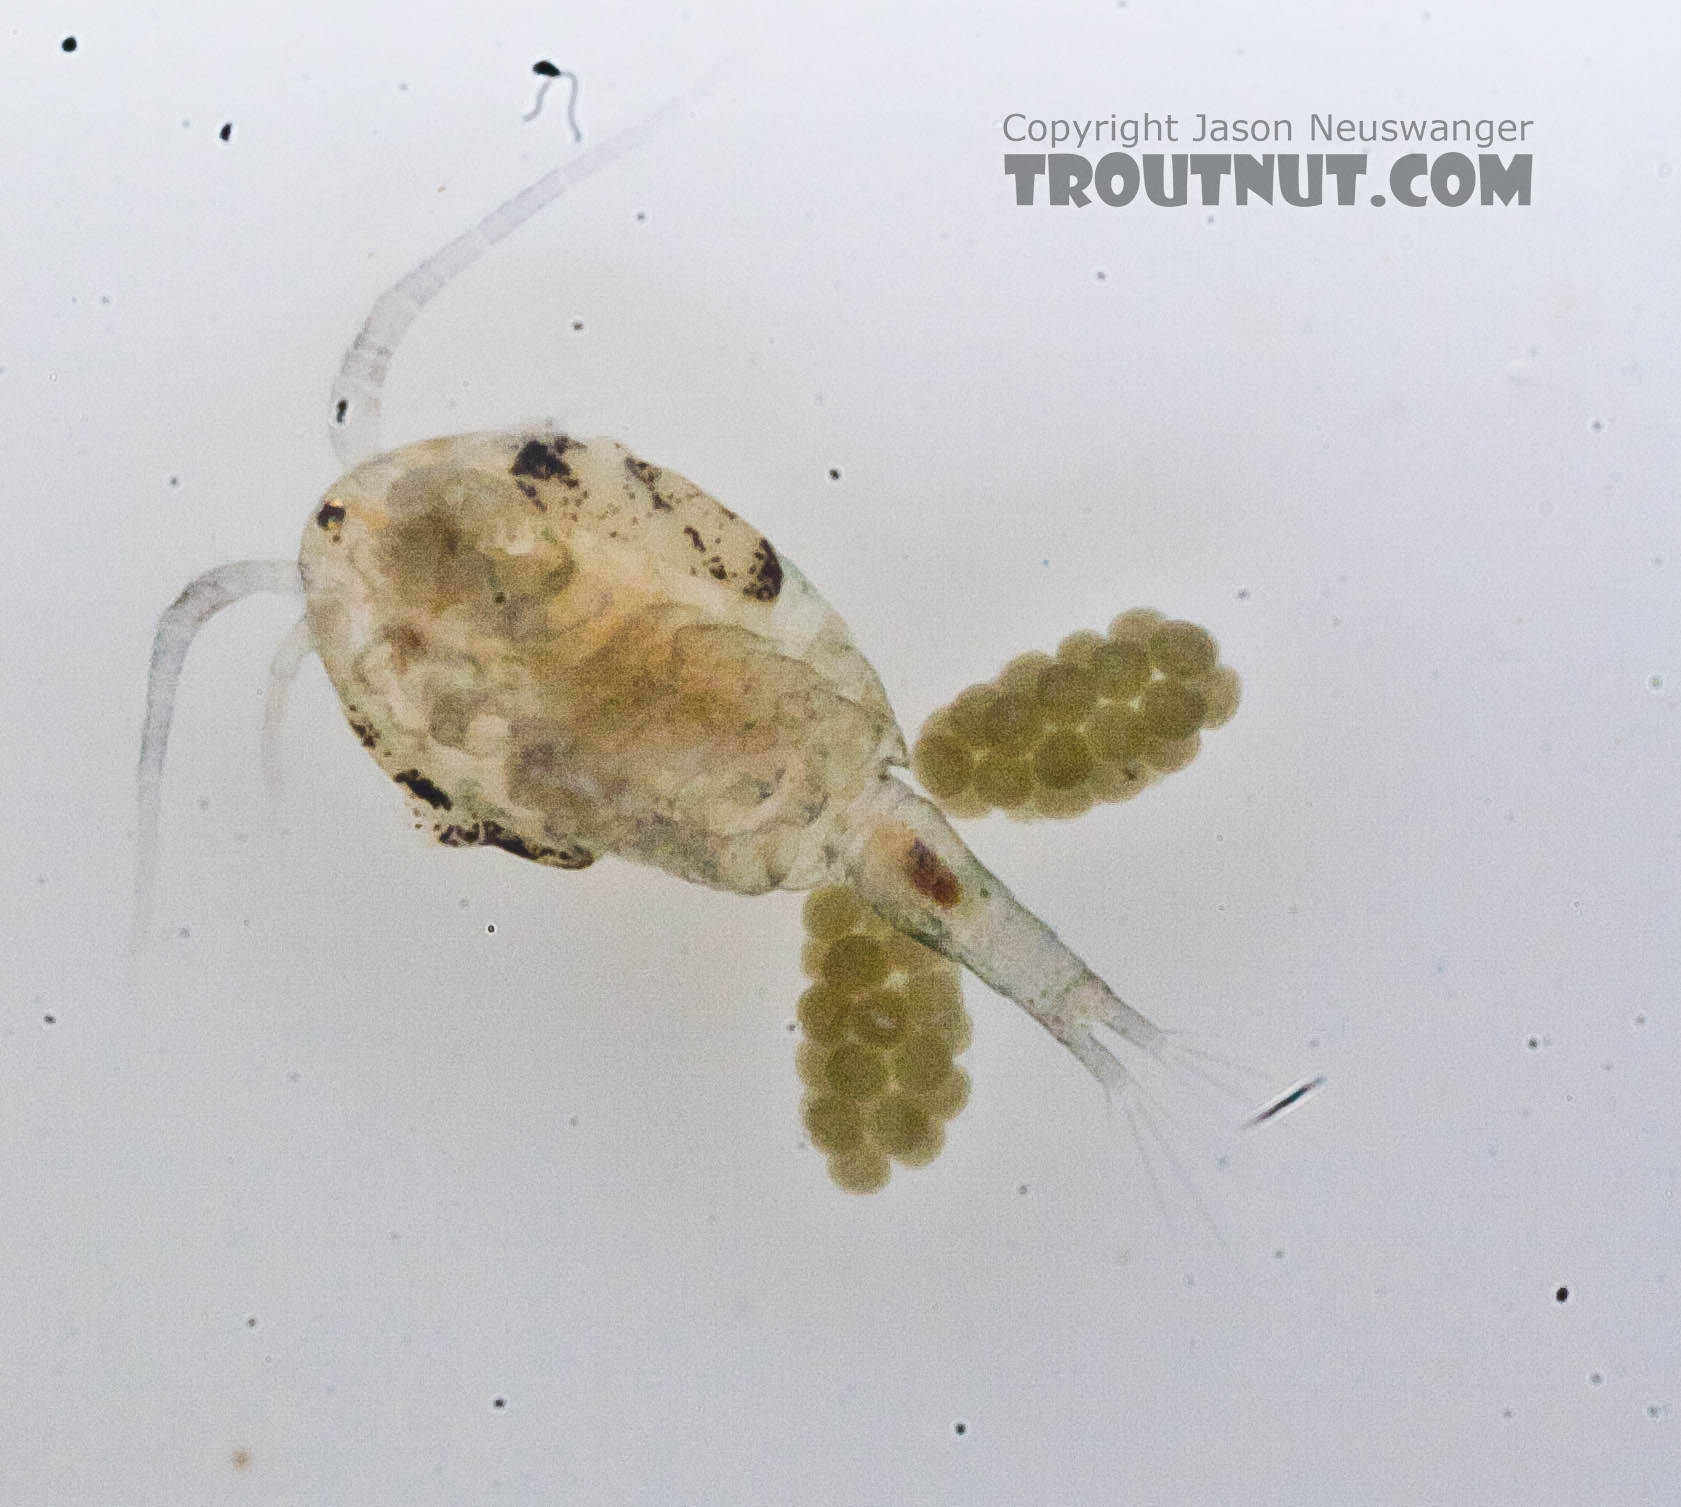 Female Copepoda (Copepods) Copepod Adult from the Chena River in Alaska